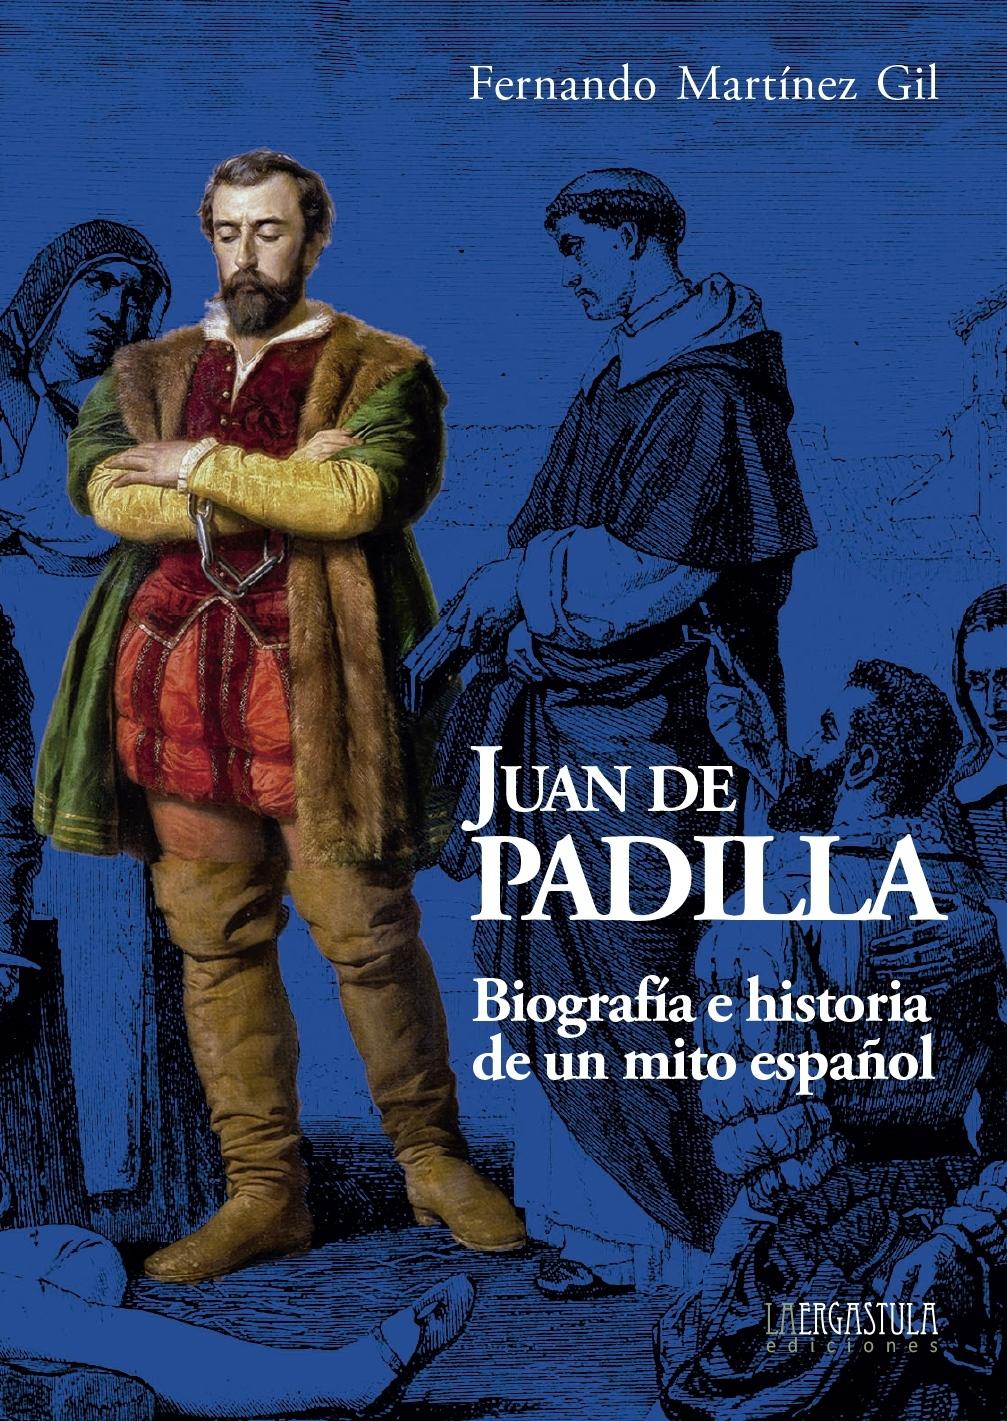 Juan de Padilla "Biografía e historia de un mito español". 